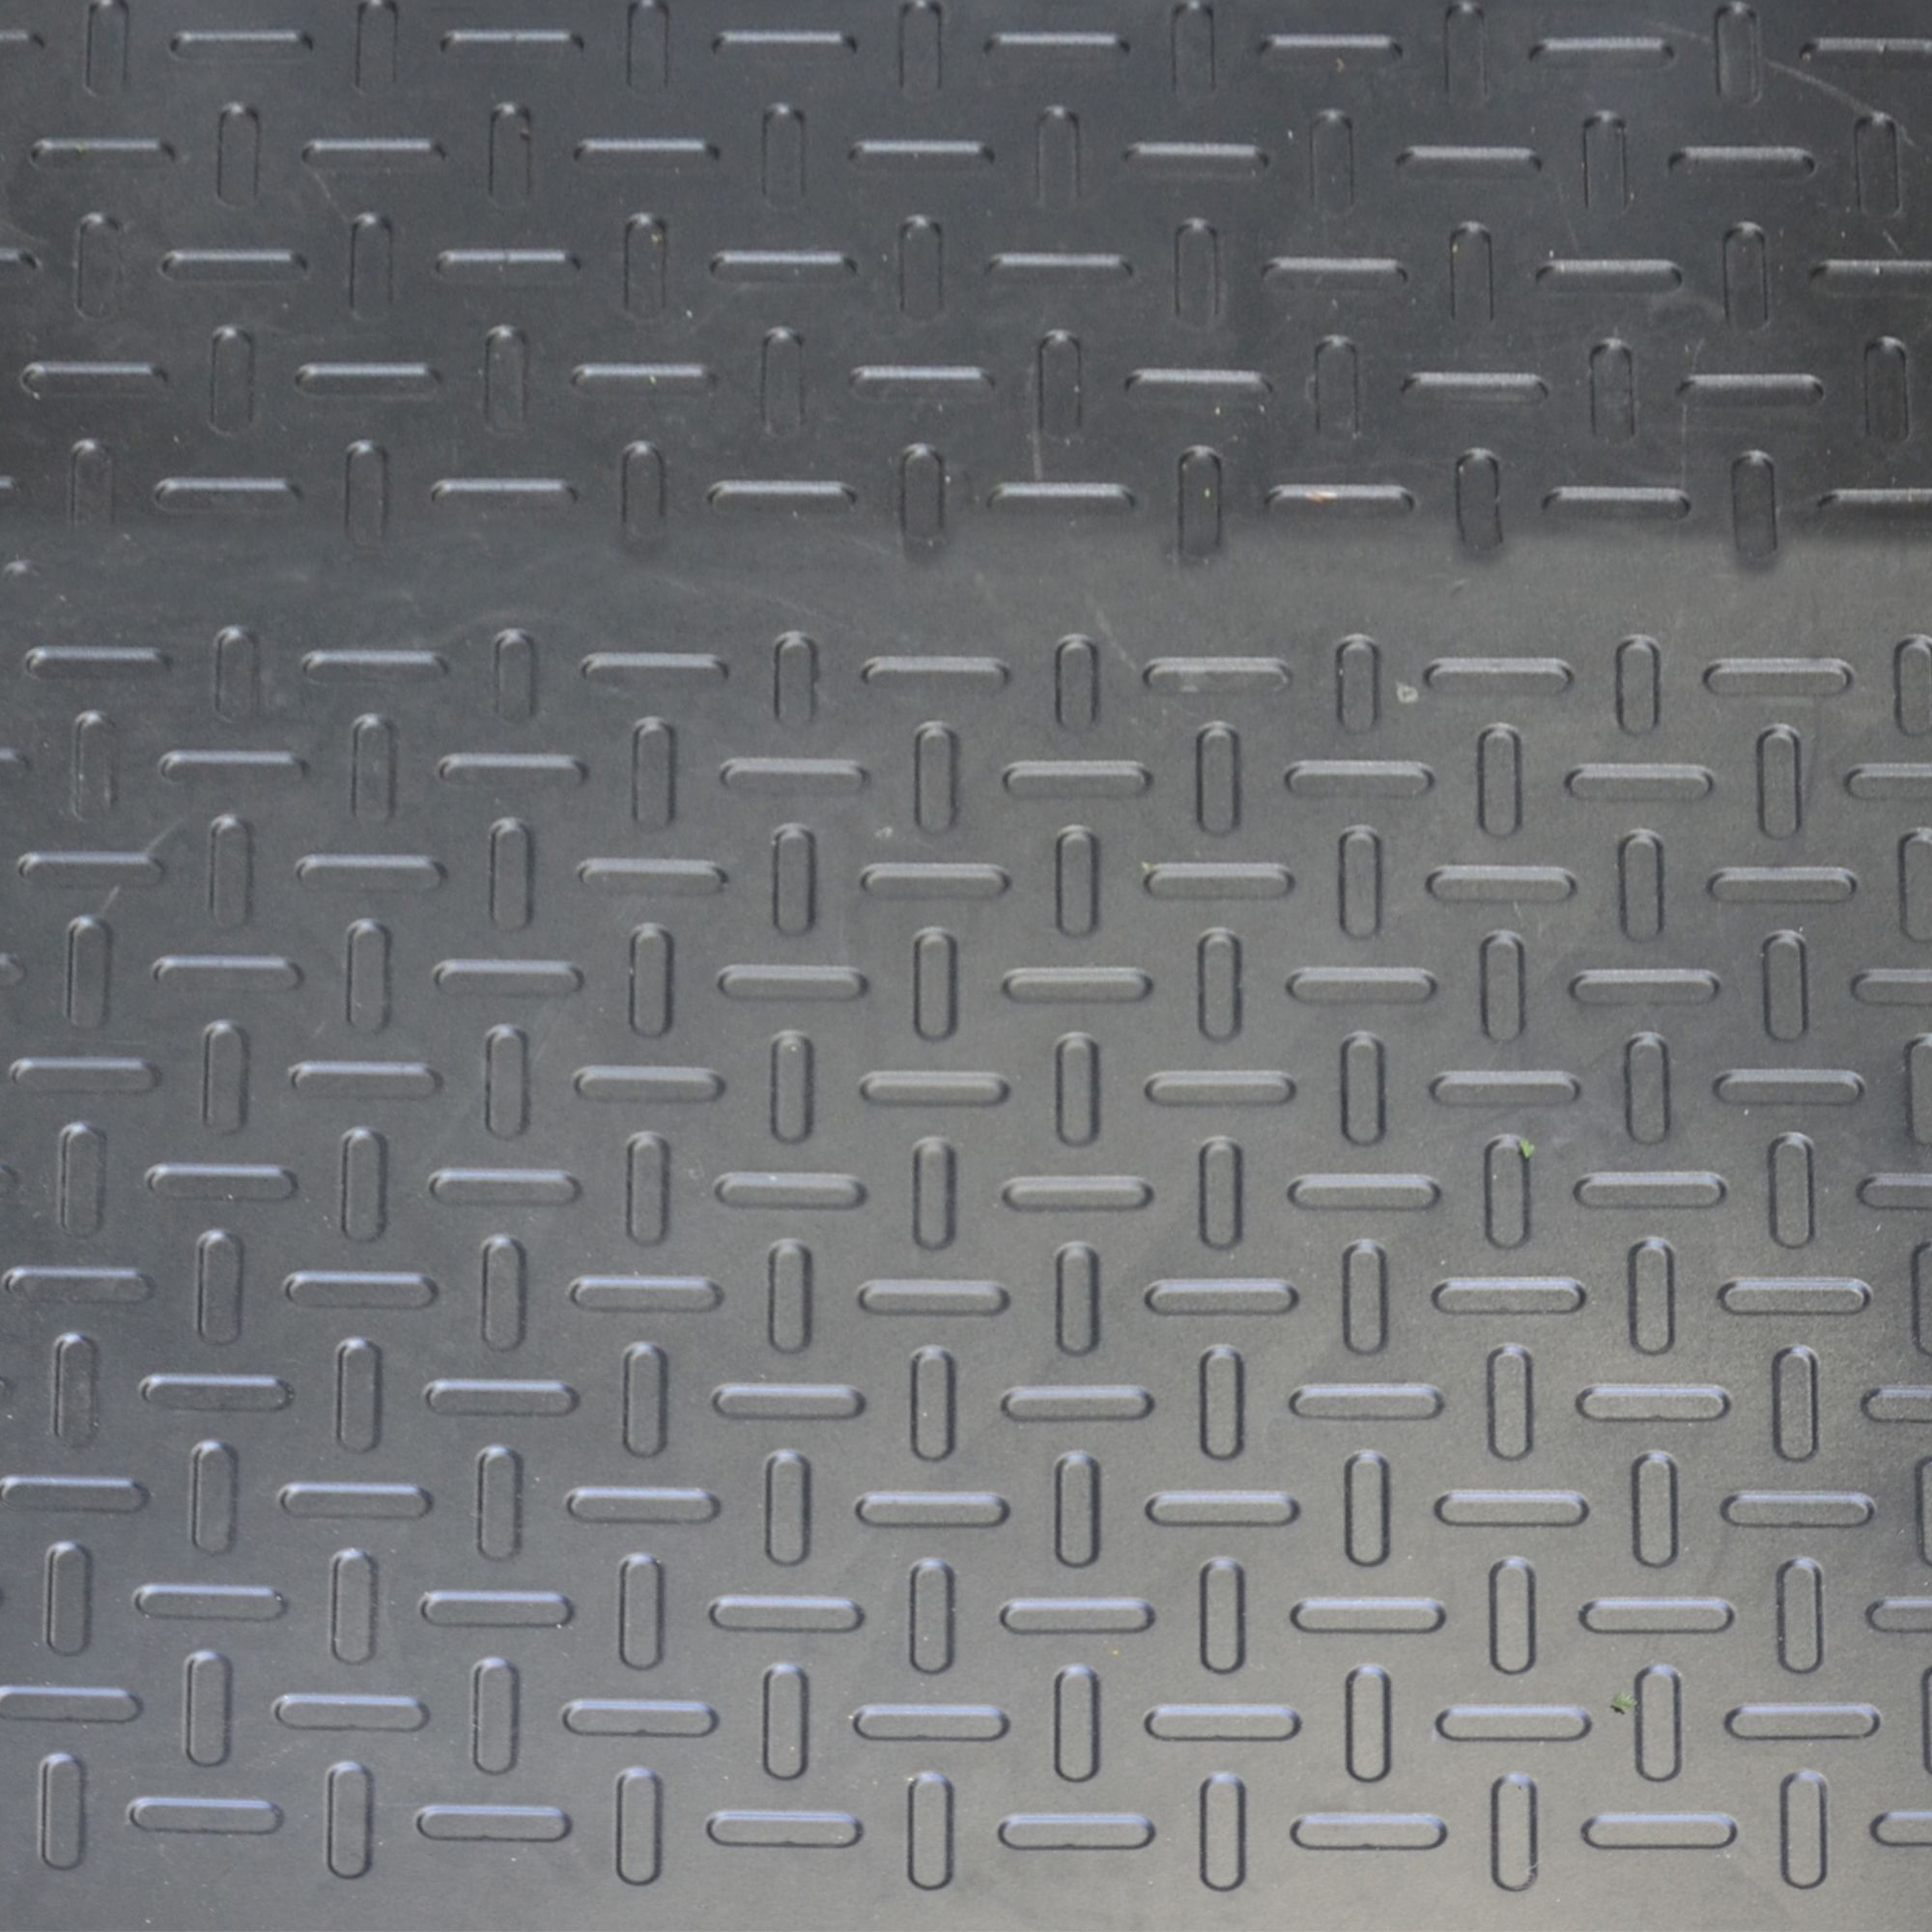 Palram - Canopia Skylight 6x4 ft Apex Dark grey Plastic Shed with floor